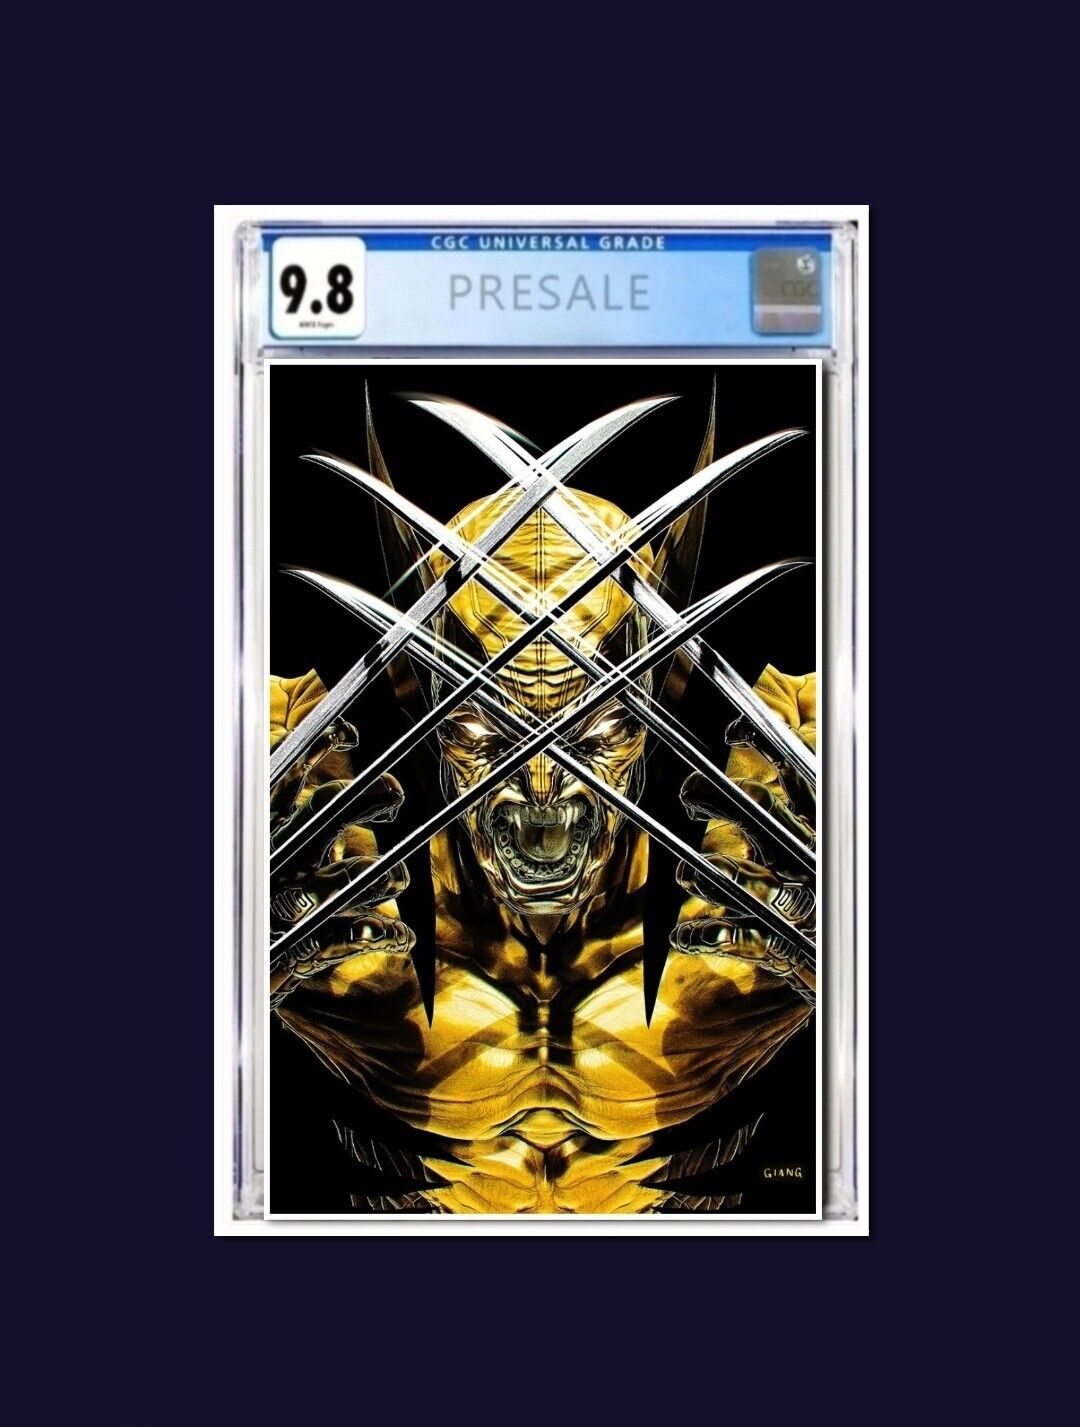 🔥 Wolverine #1 CGC 9.8 Graded PRESALE John Giang Virgin Edition LTD 1000 🔥